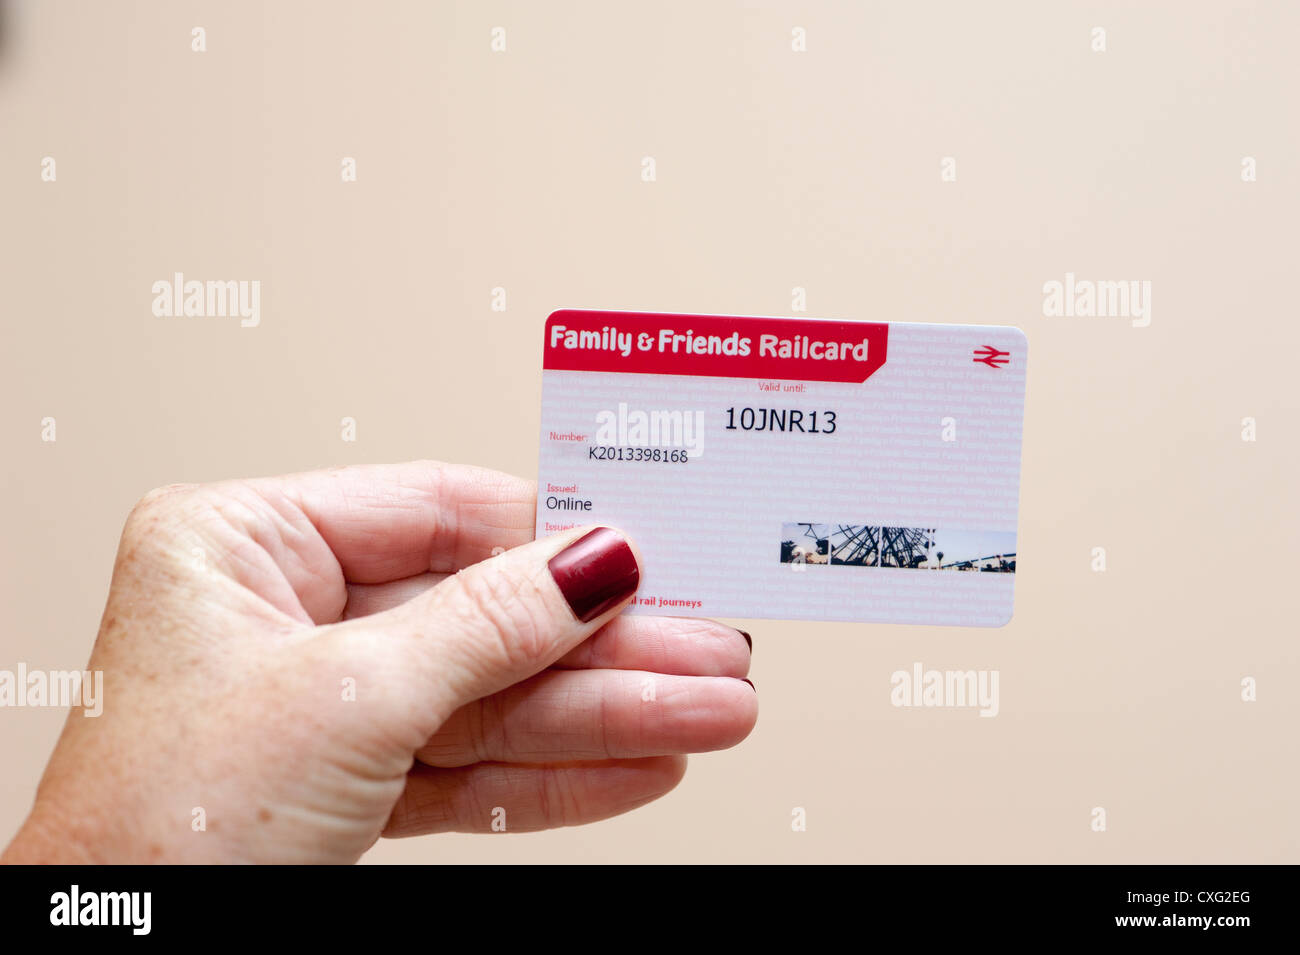 Family & Friends Railcard for UK rail travel Stock Photo